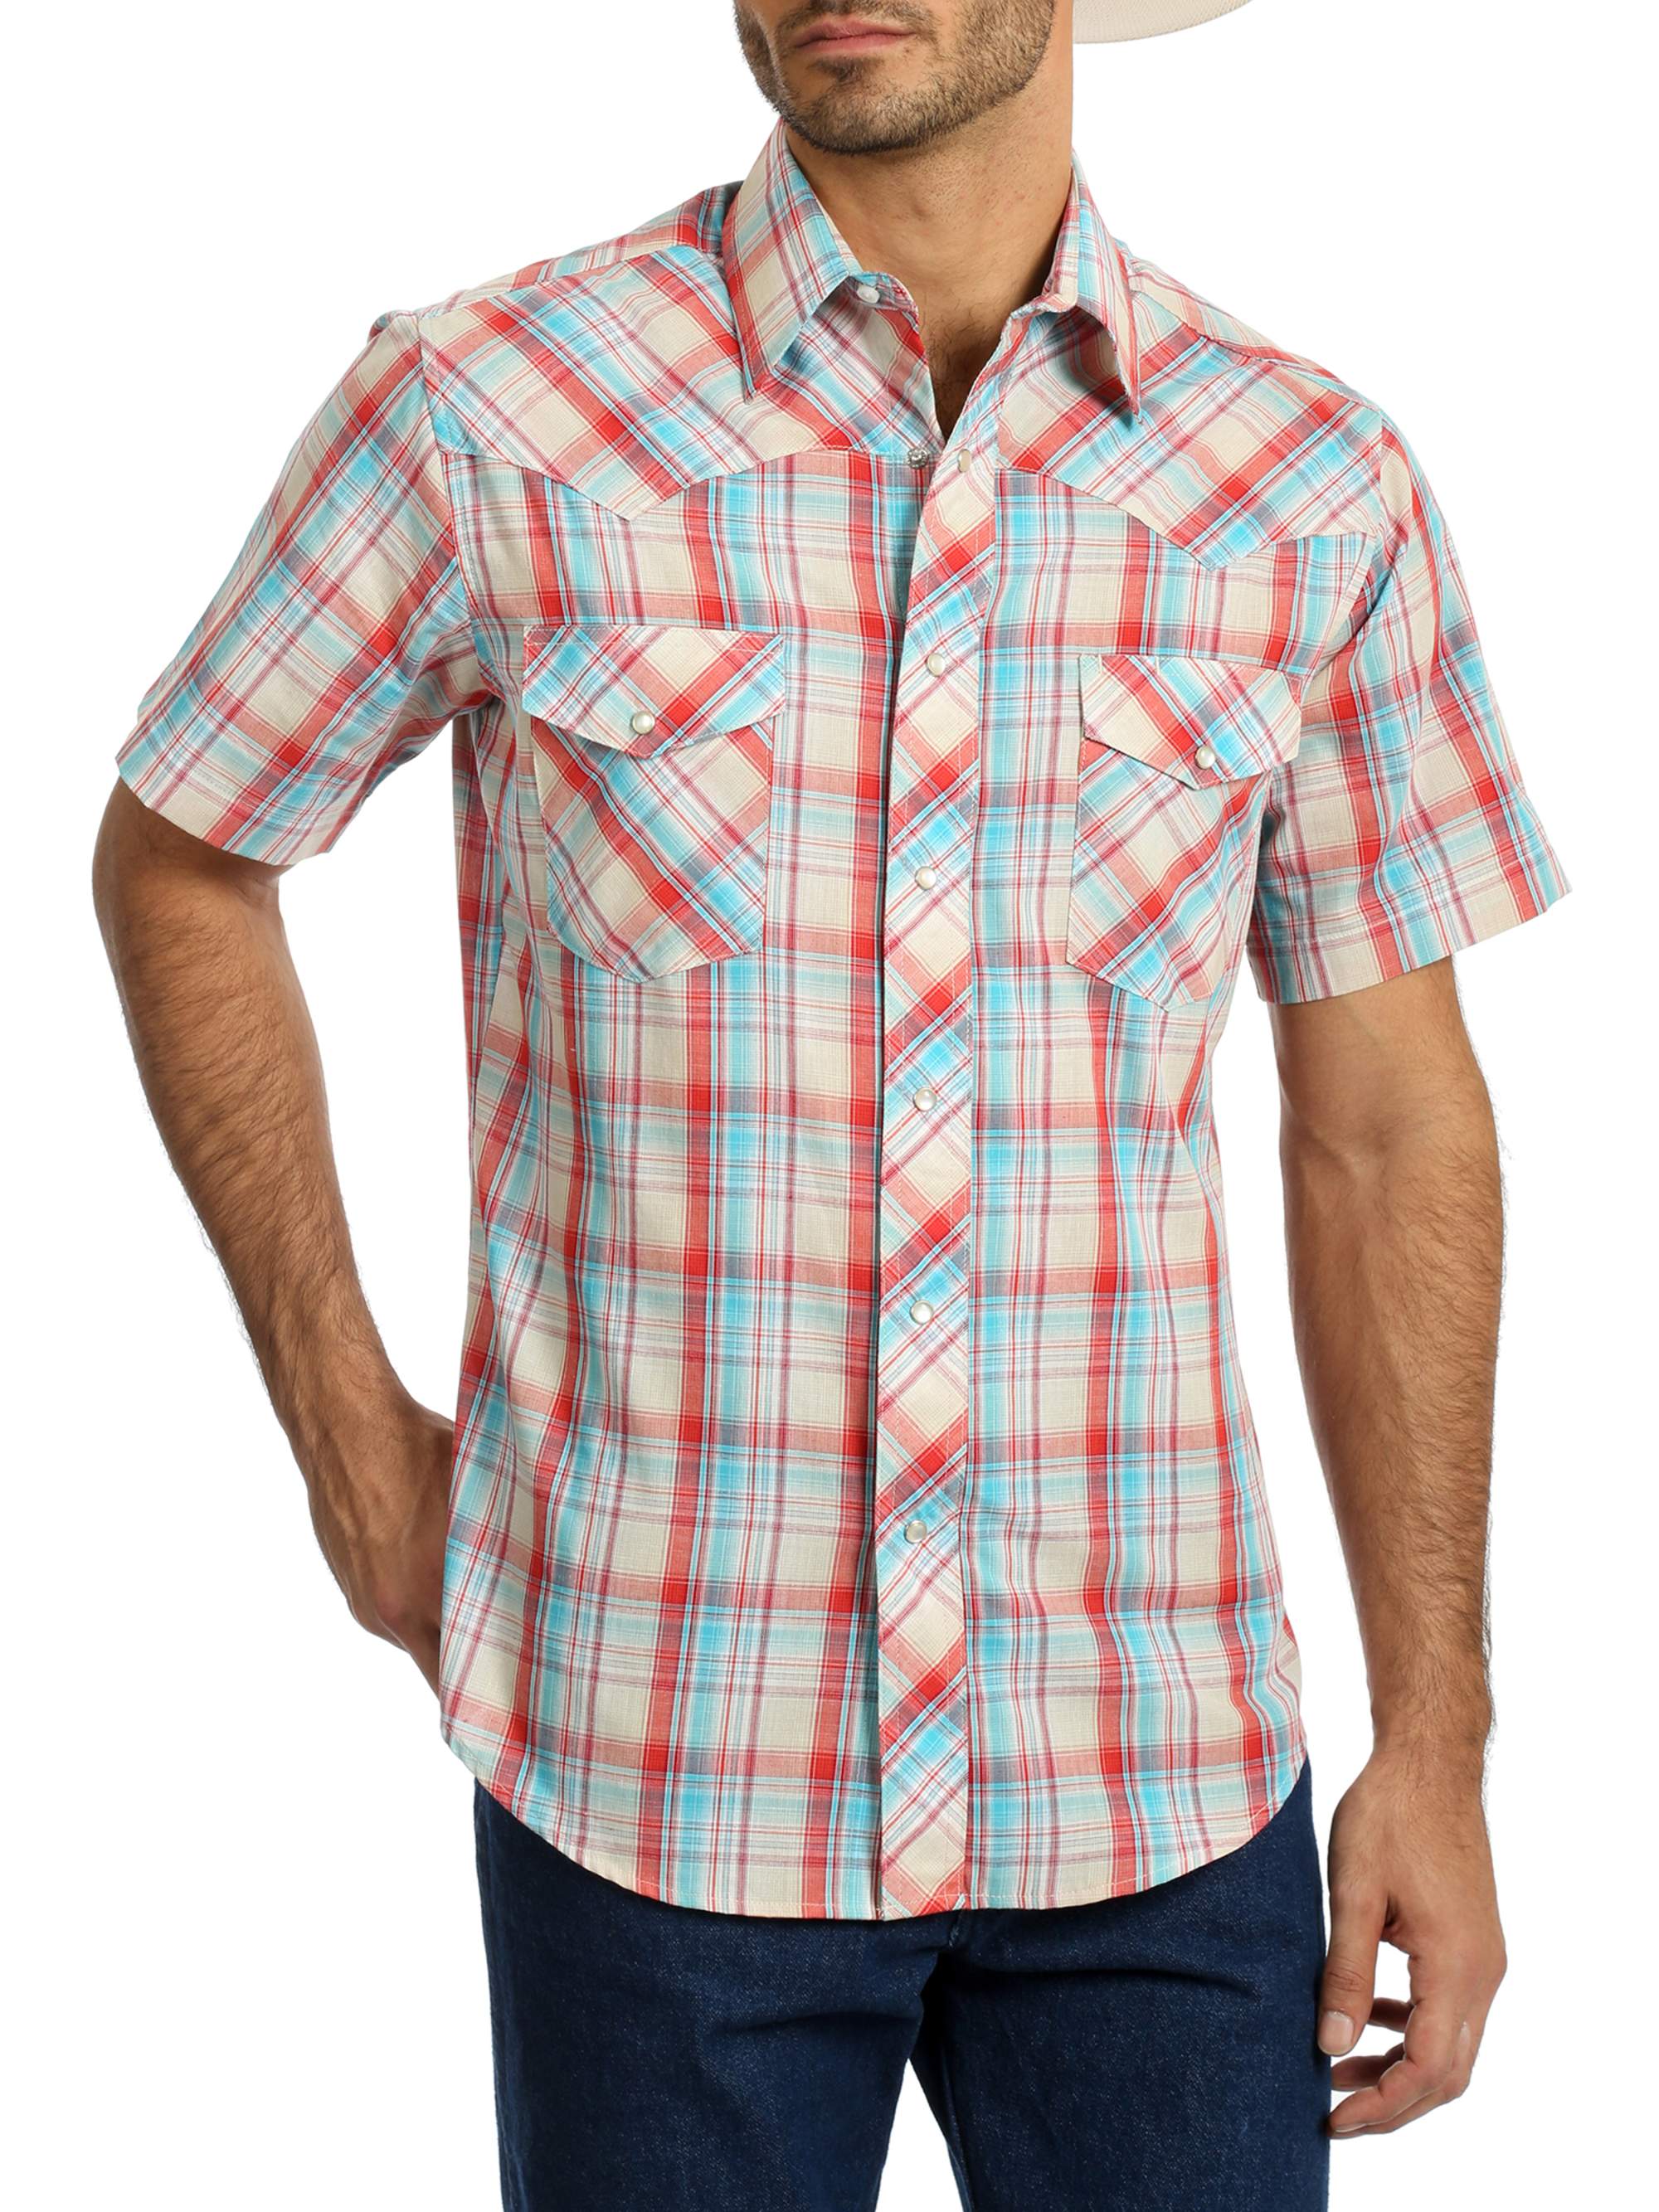 Wrangler Men's and Big Men's Short Sleeve Plaid Western Shirt - image 1 of 3